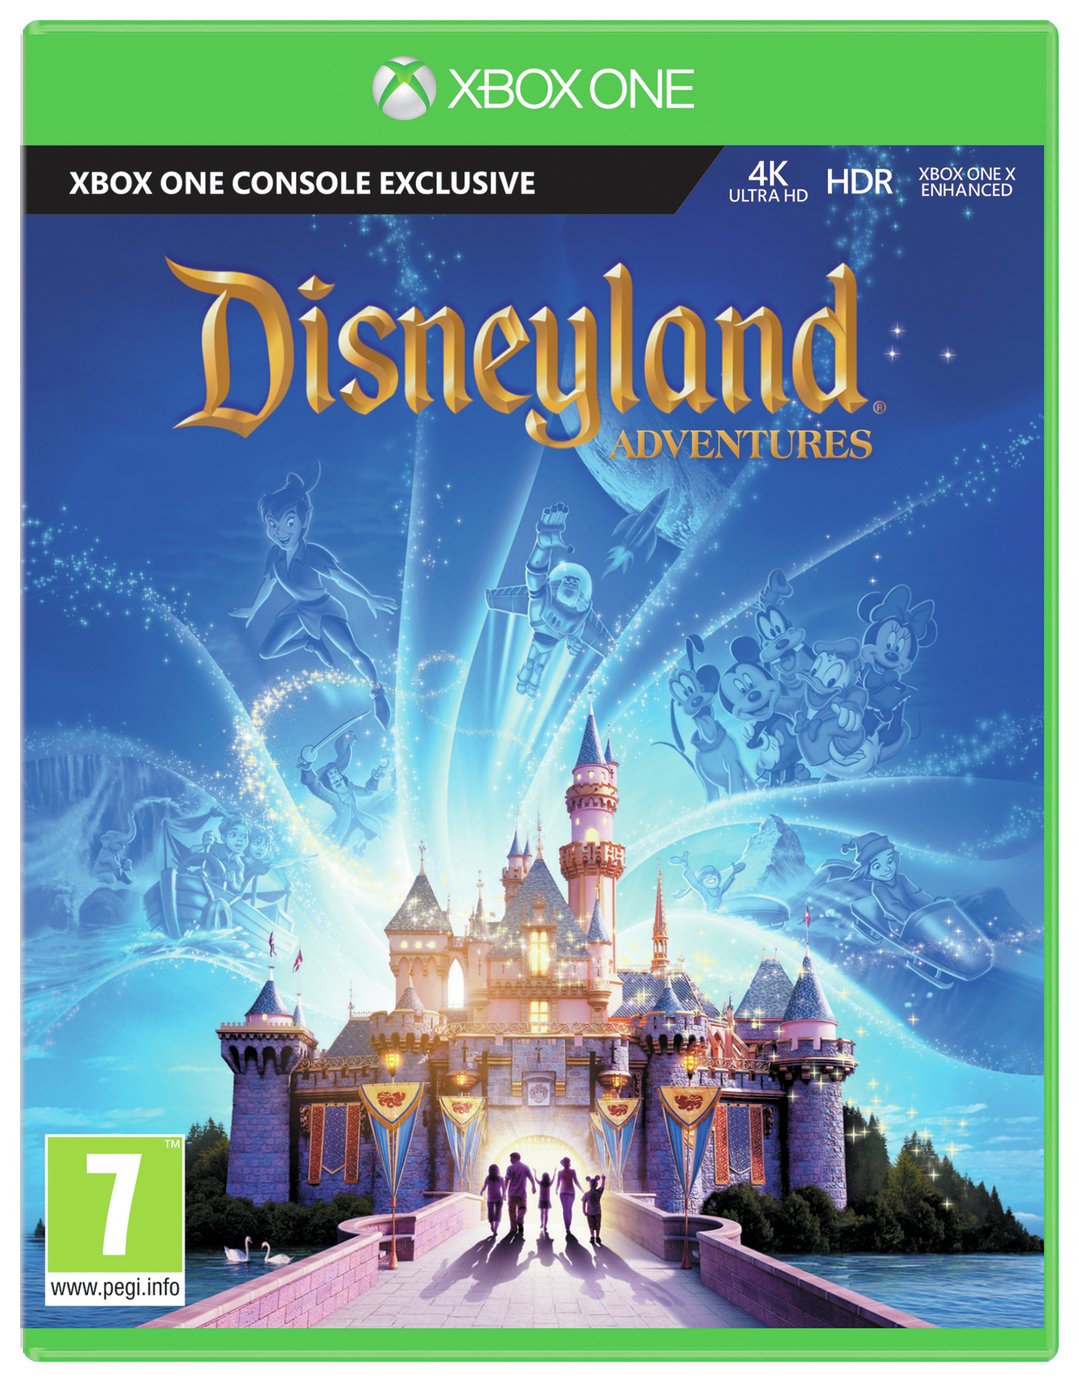 Disneyland Adventures Xbox One Game review